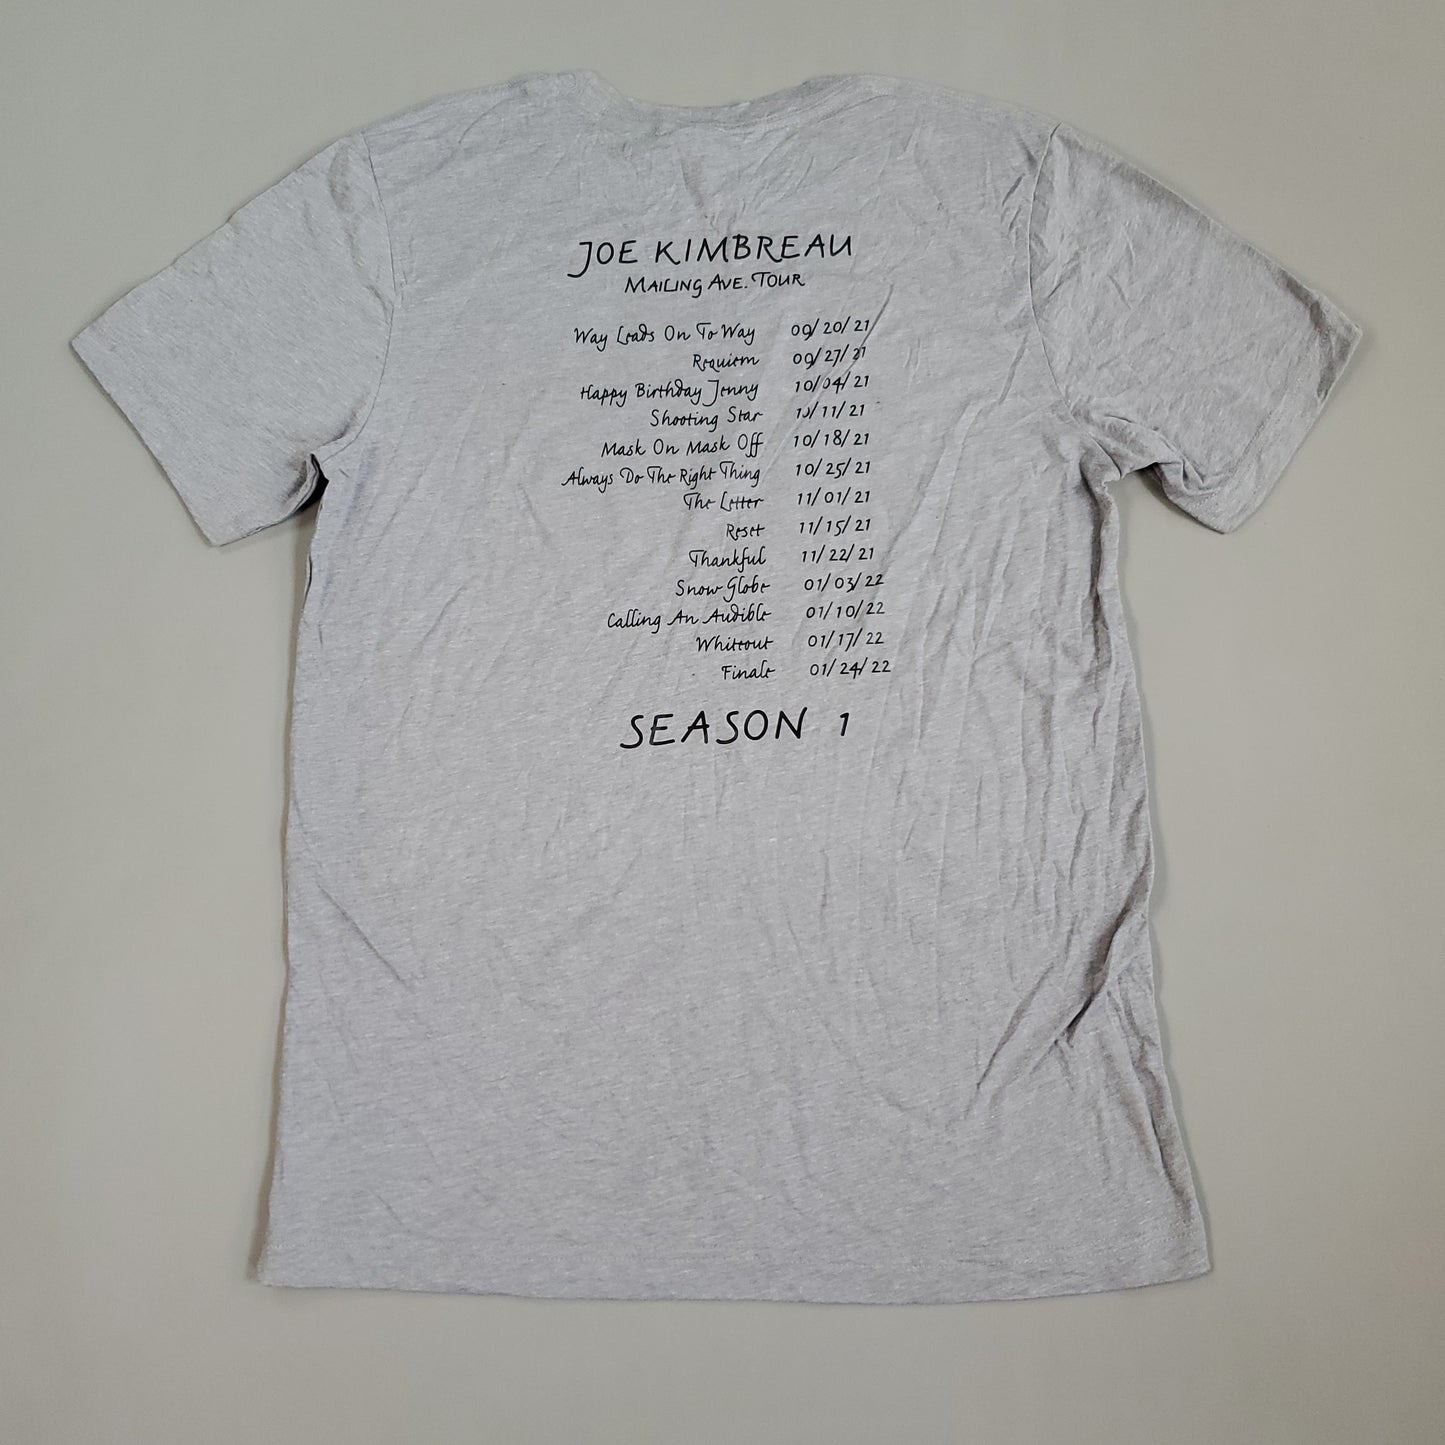 ORDINARY JOE Season 1 Tee Shirt Joe Kimbreau Mailing Ave Tour Sz M Gray (New Other)